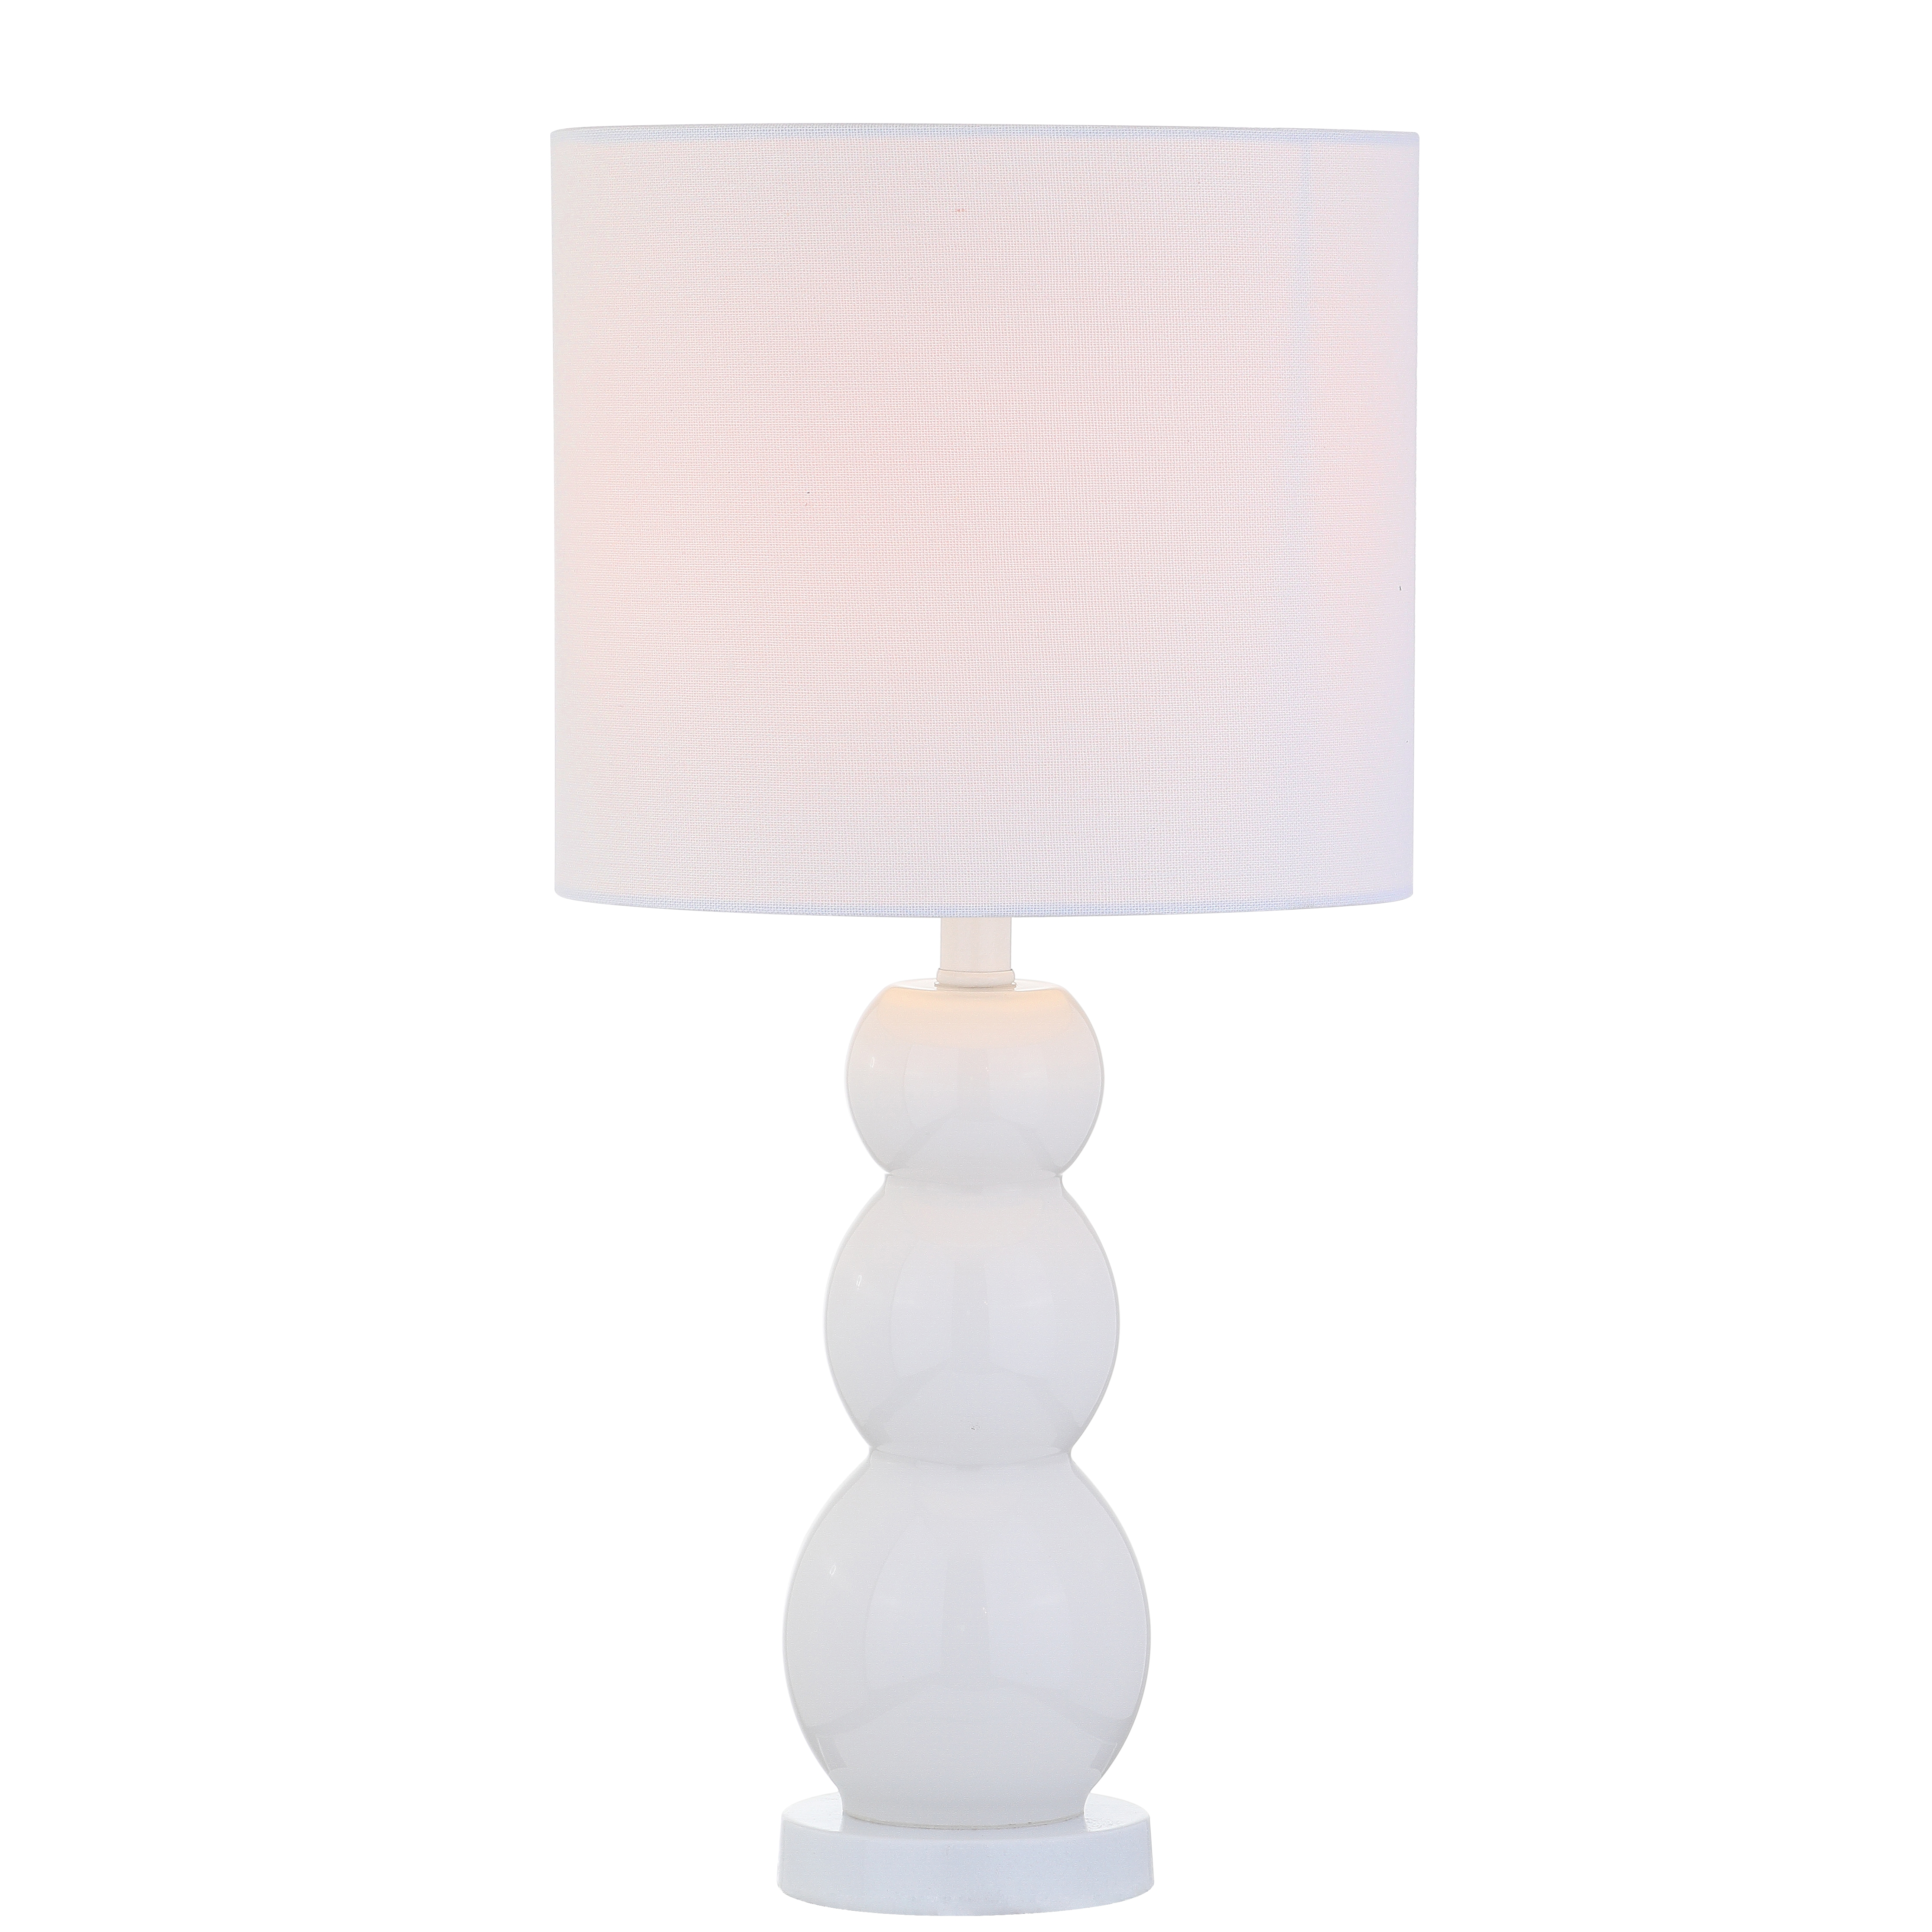 Cabra Table Lamp - White - Safavieh - Image 0